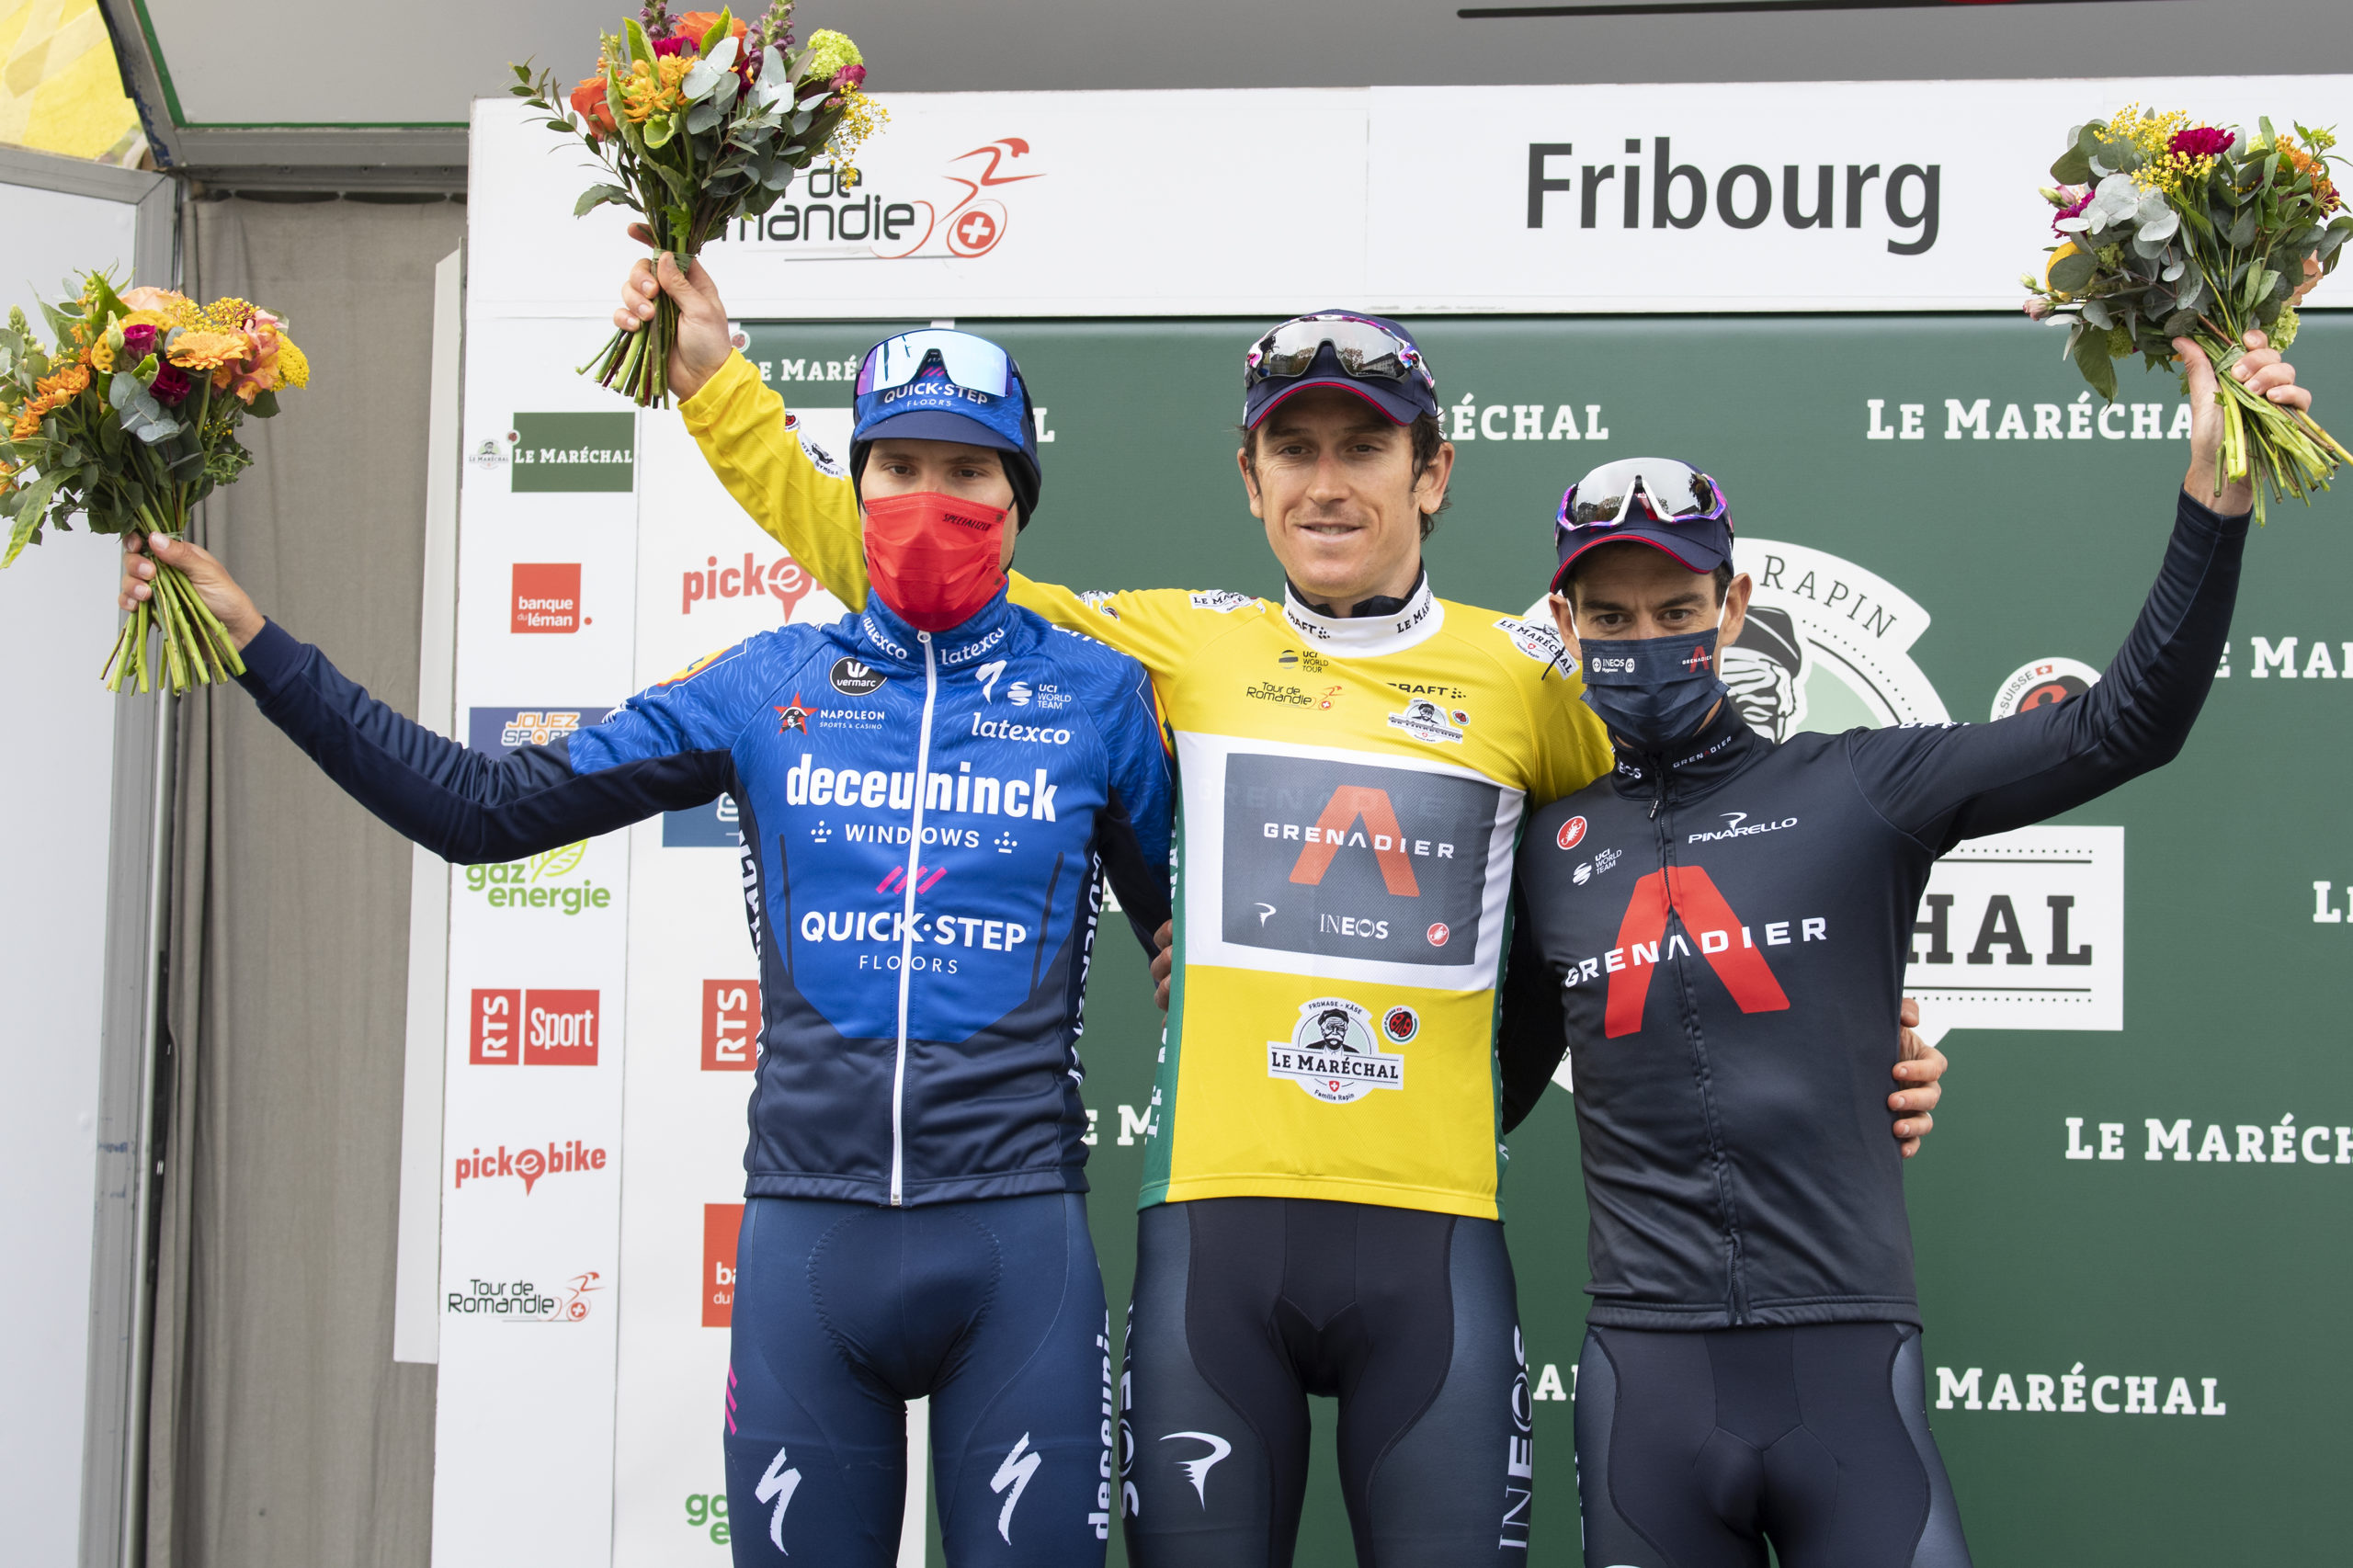 02.05.2021; Fribourg; Radsport - Tour de Romandie 2021; 5 Etappe Zeitfahren Fribourg; Podium vl nr  Fausto Masnada (ITA) Geraint Thomas (GBR) Richie Porte (AUS)(Jean-Guy Python/freshfocus)